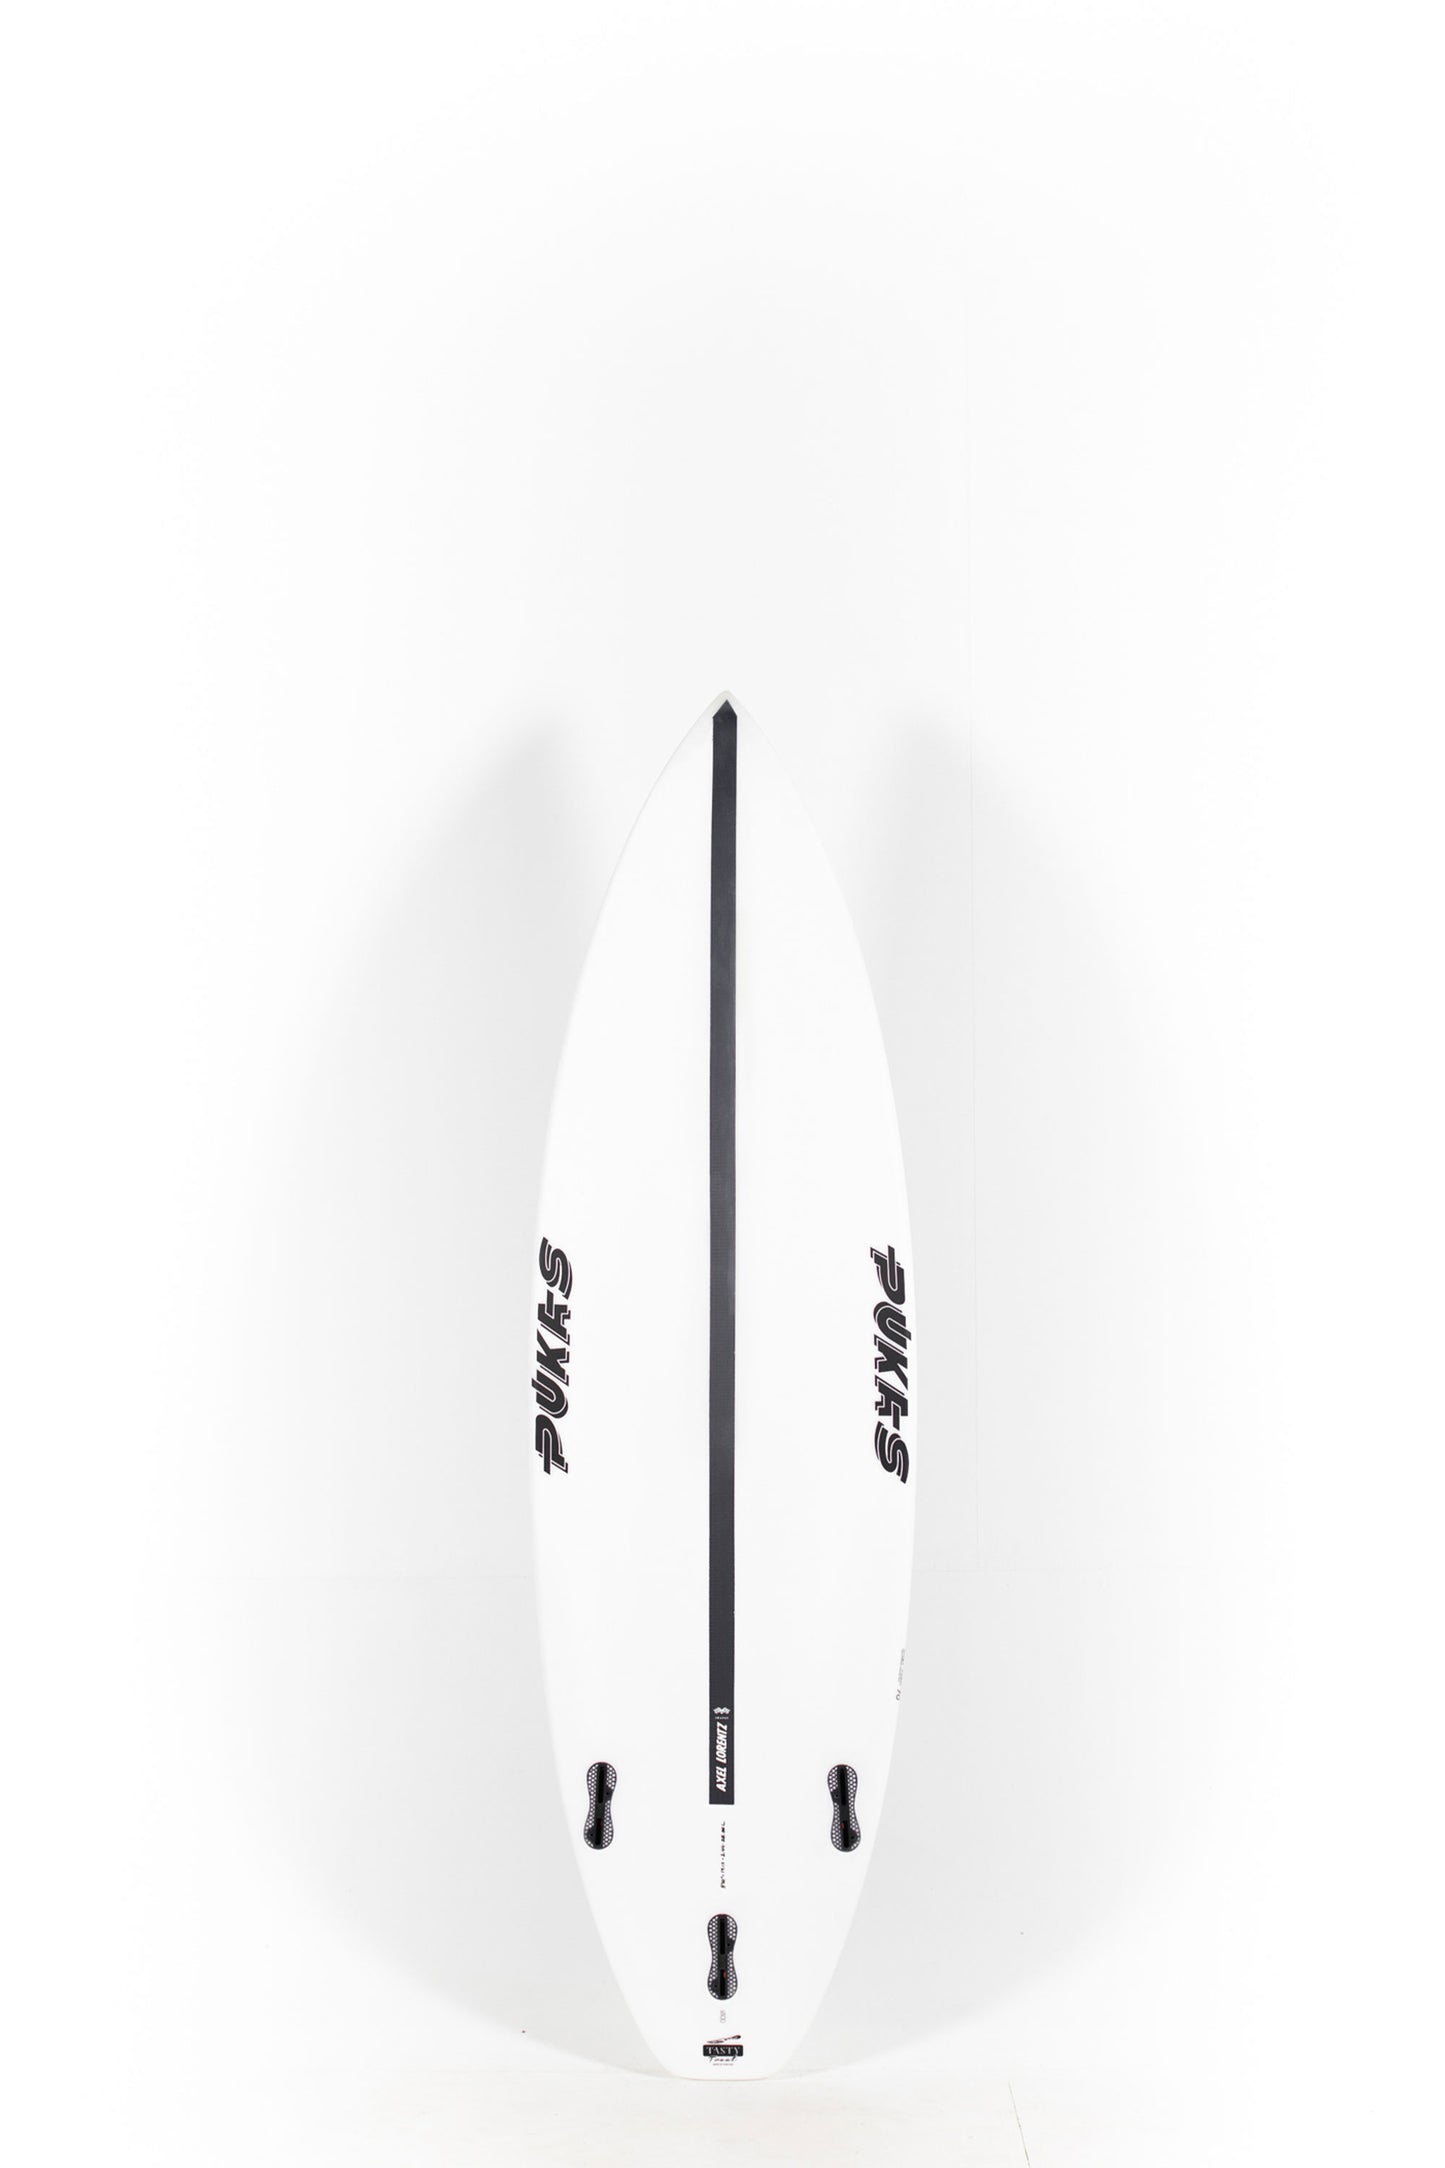 Pukas Surf Shop - Pukas Surfboard - INNCA Tech - TASTY TREAT by Axel Lorentz- 5’10” x 19,13 x 2,44 x 28,86L